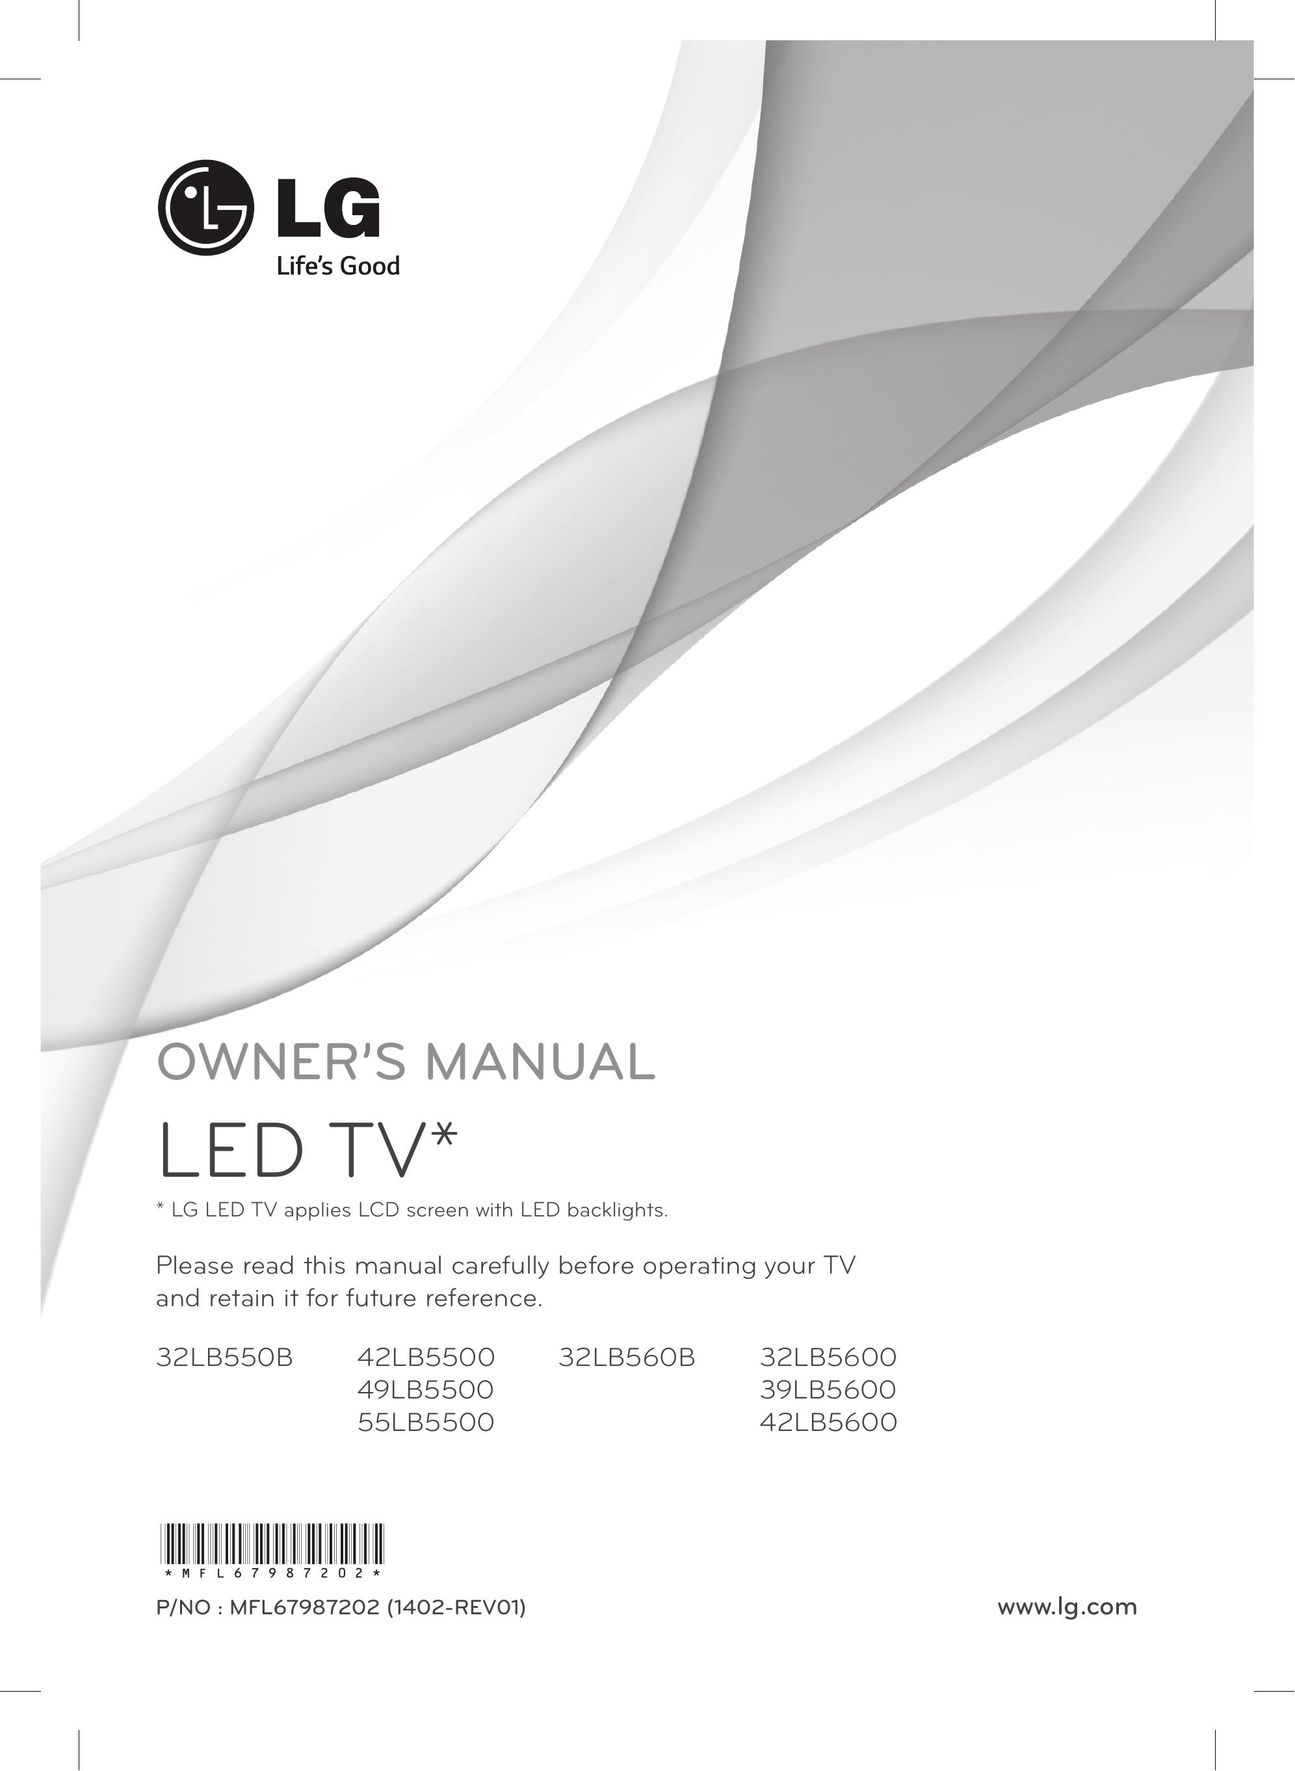 Samsung 32LB560B Flat Panel Television User Manual